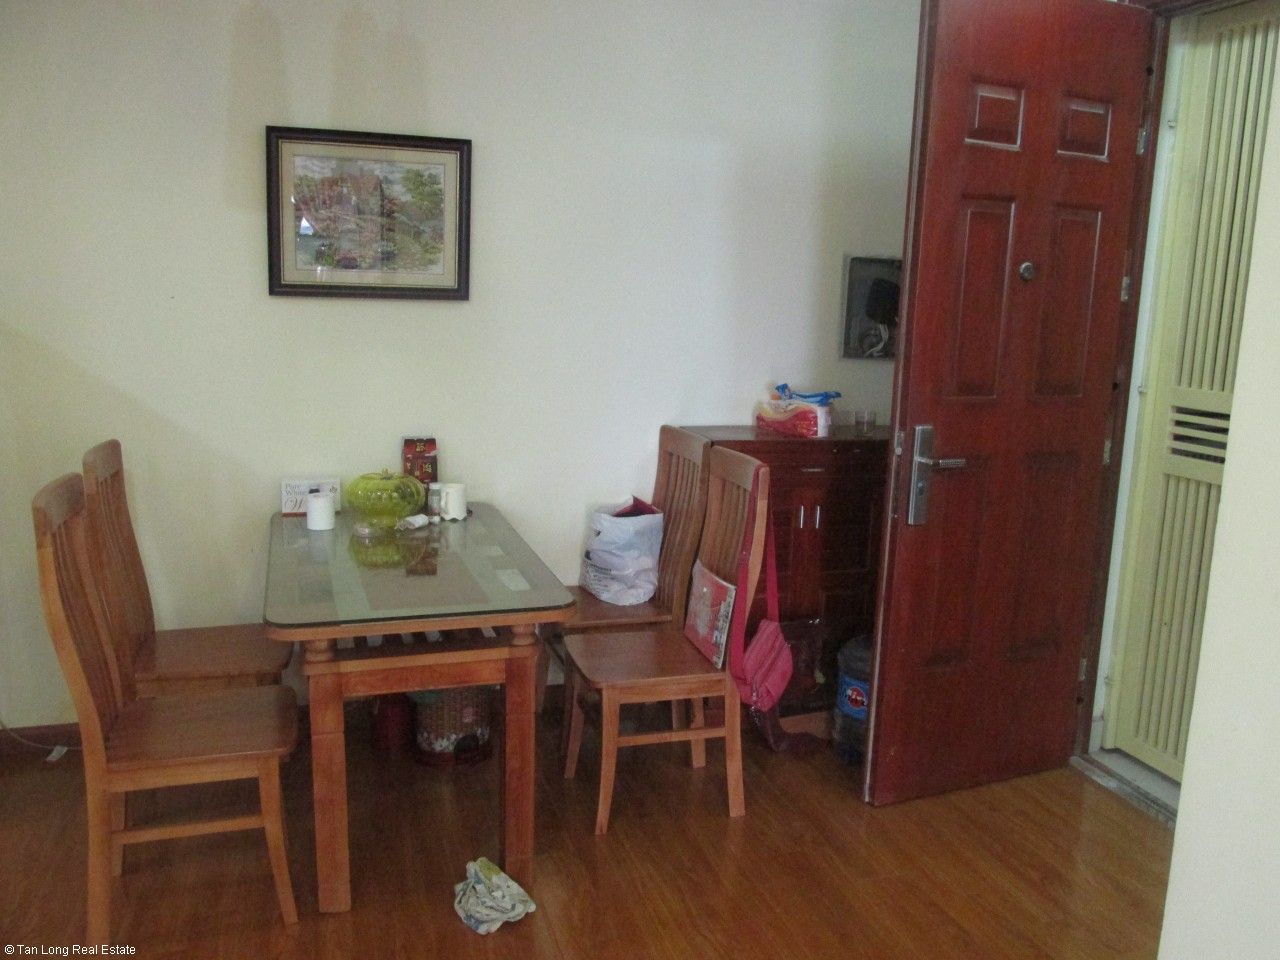 02 bedroom apartment for rent in Bac Tu Liem district, Hanoi. 9